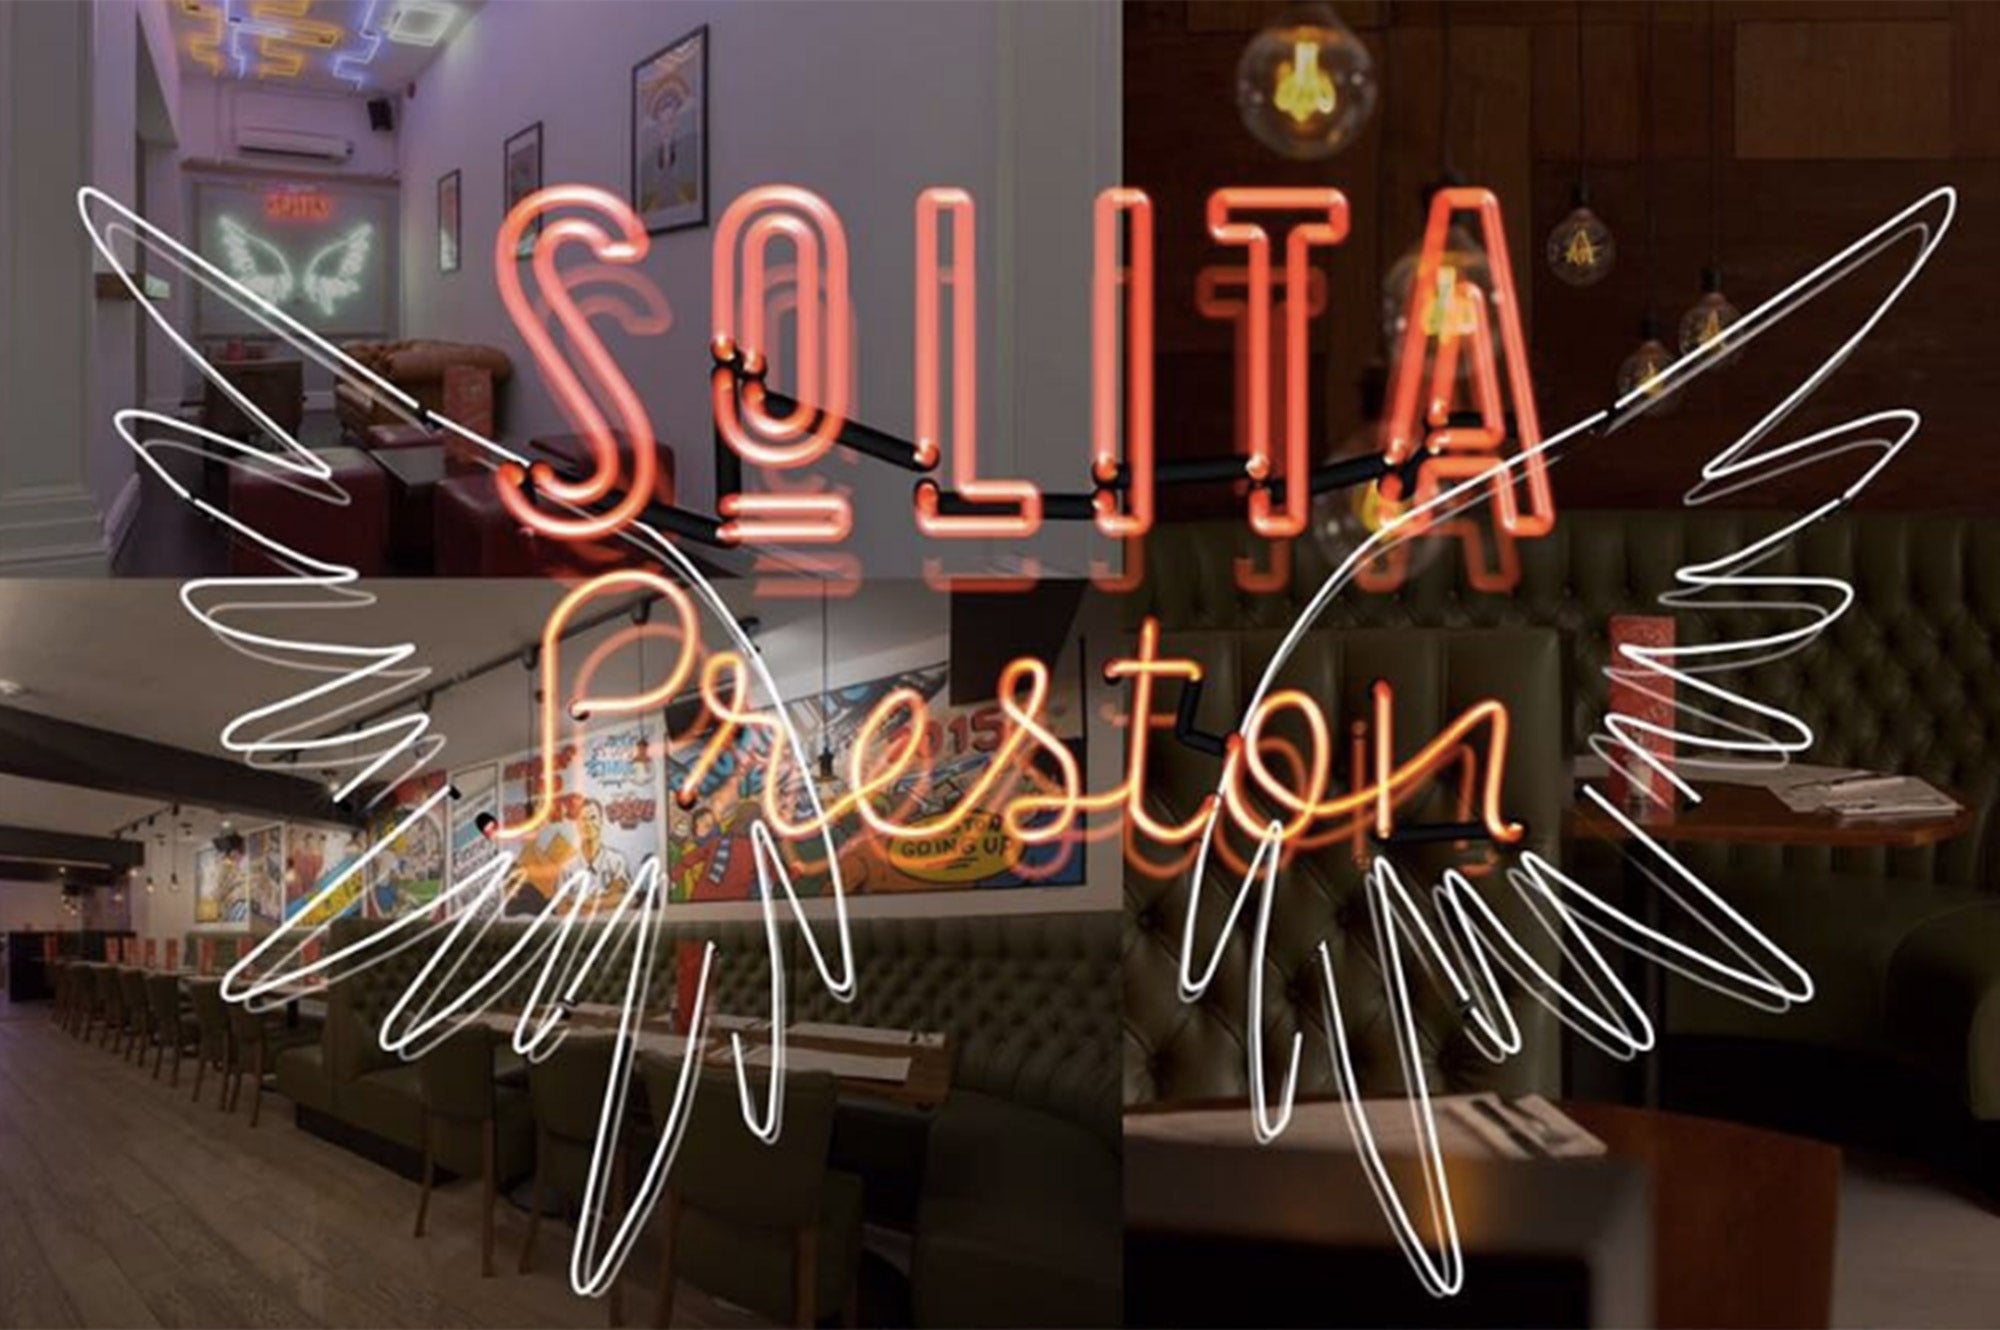 Lighting The Way For Solita Preston!